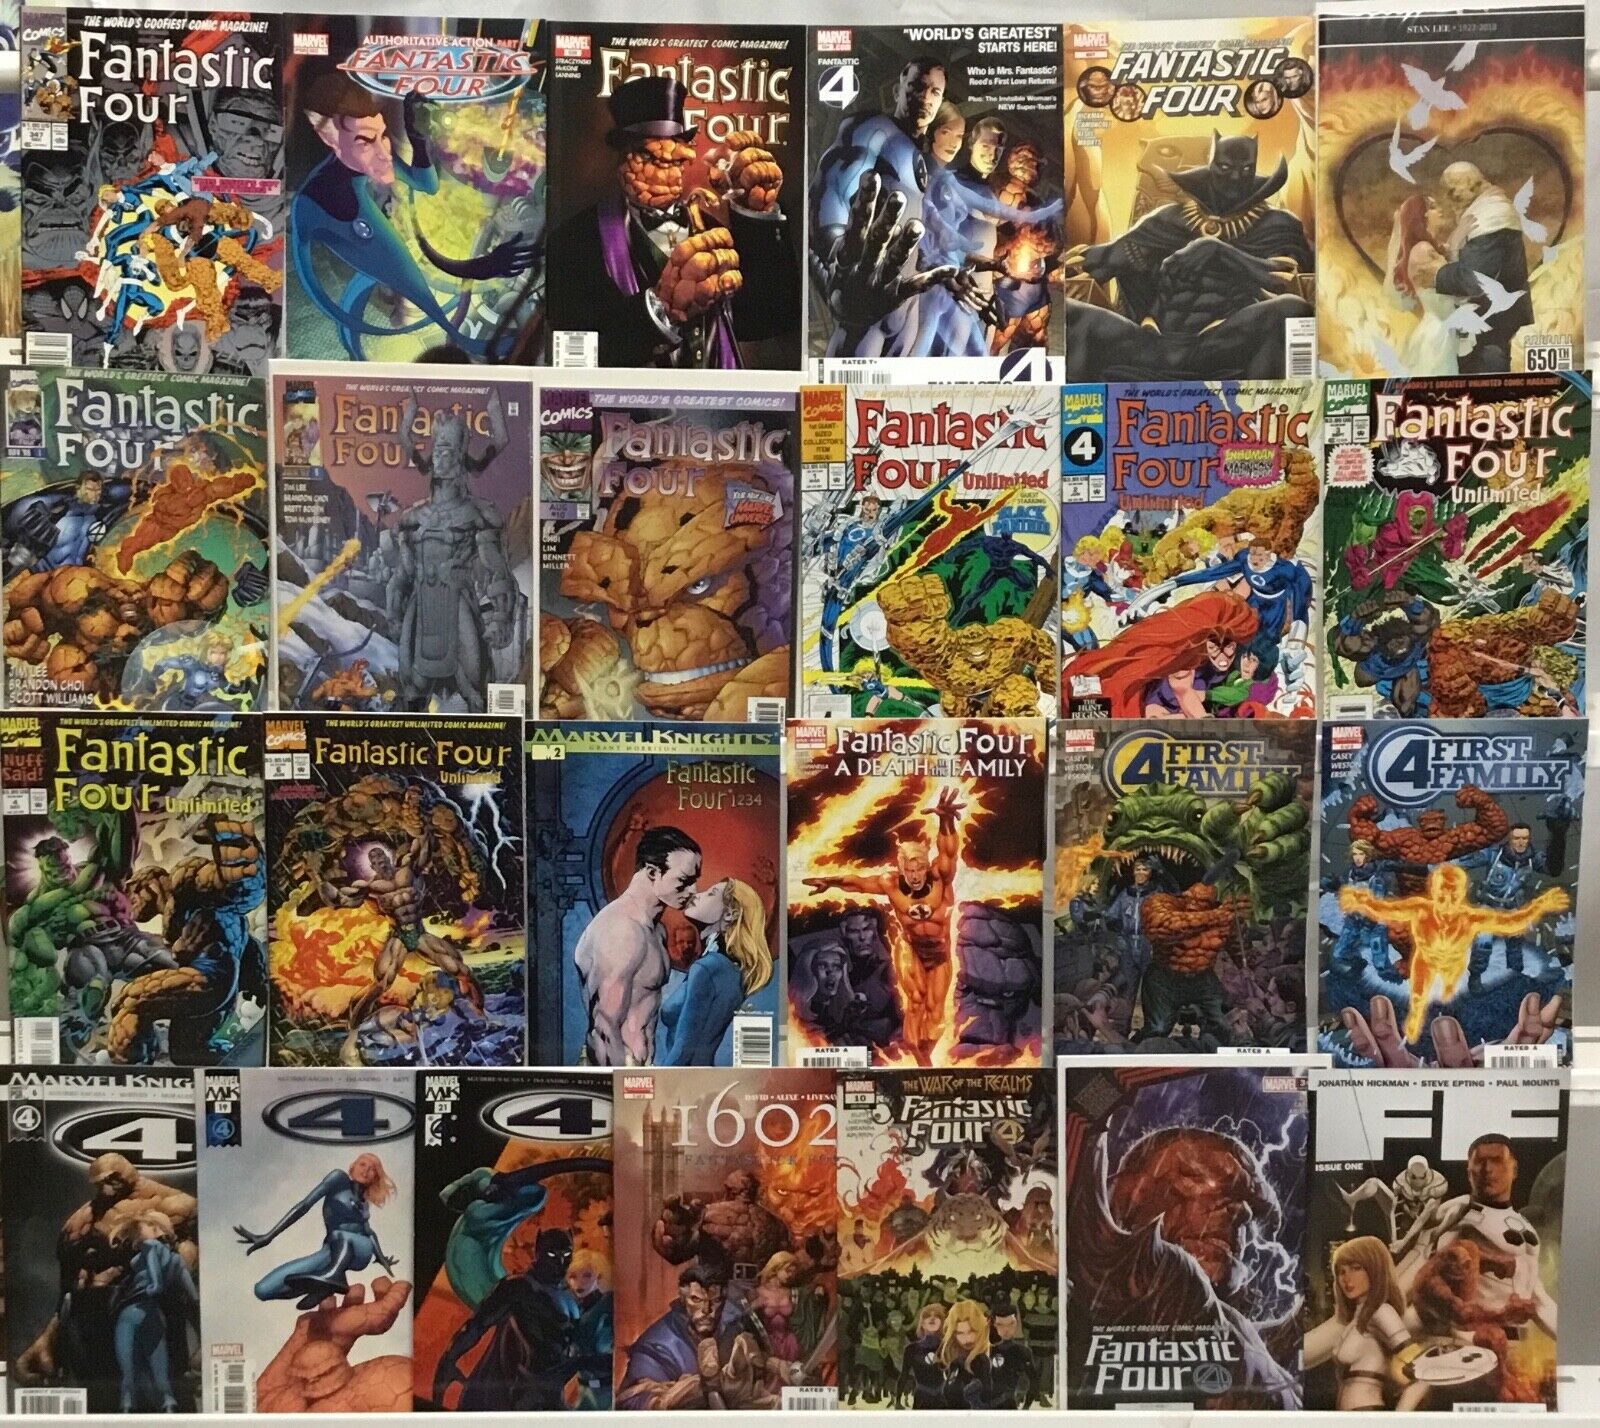 Marvel Comics Fantastic Four Comic Book Lot of 25 - 1602, Marvel Knights, FF